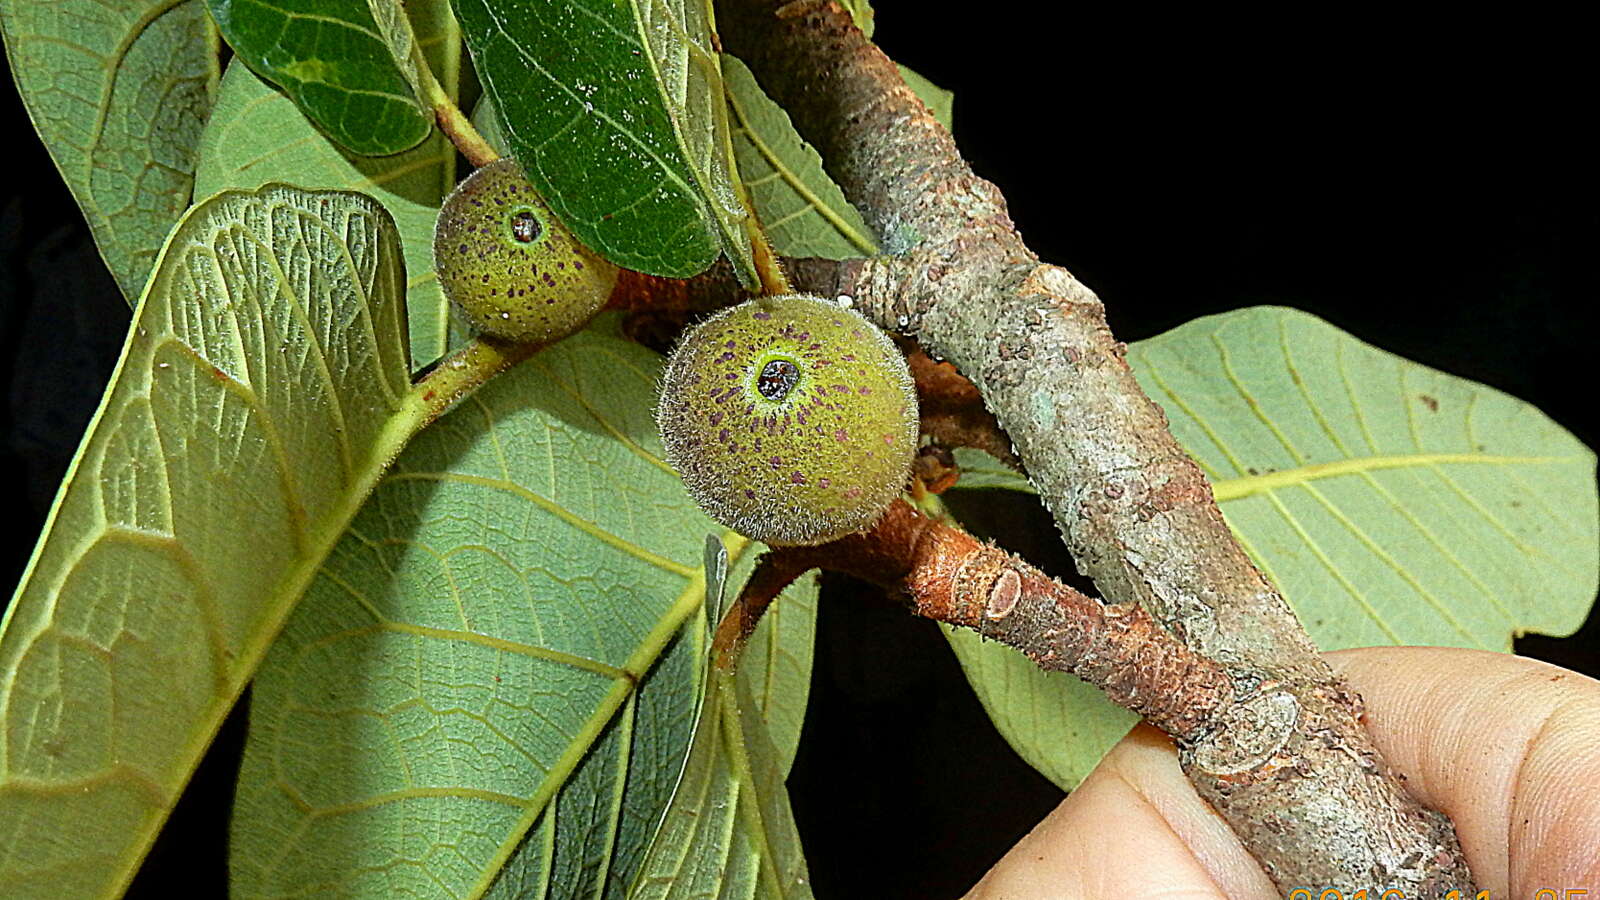 Image of Ficus gomelleira Kunth & Bouche